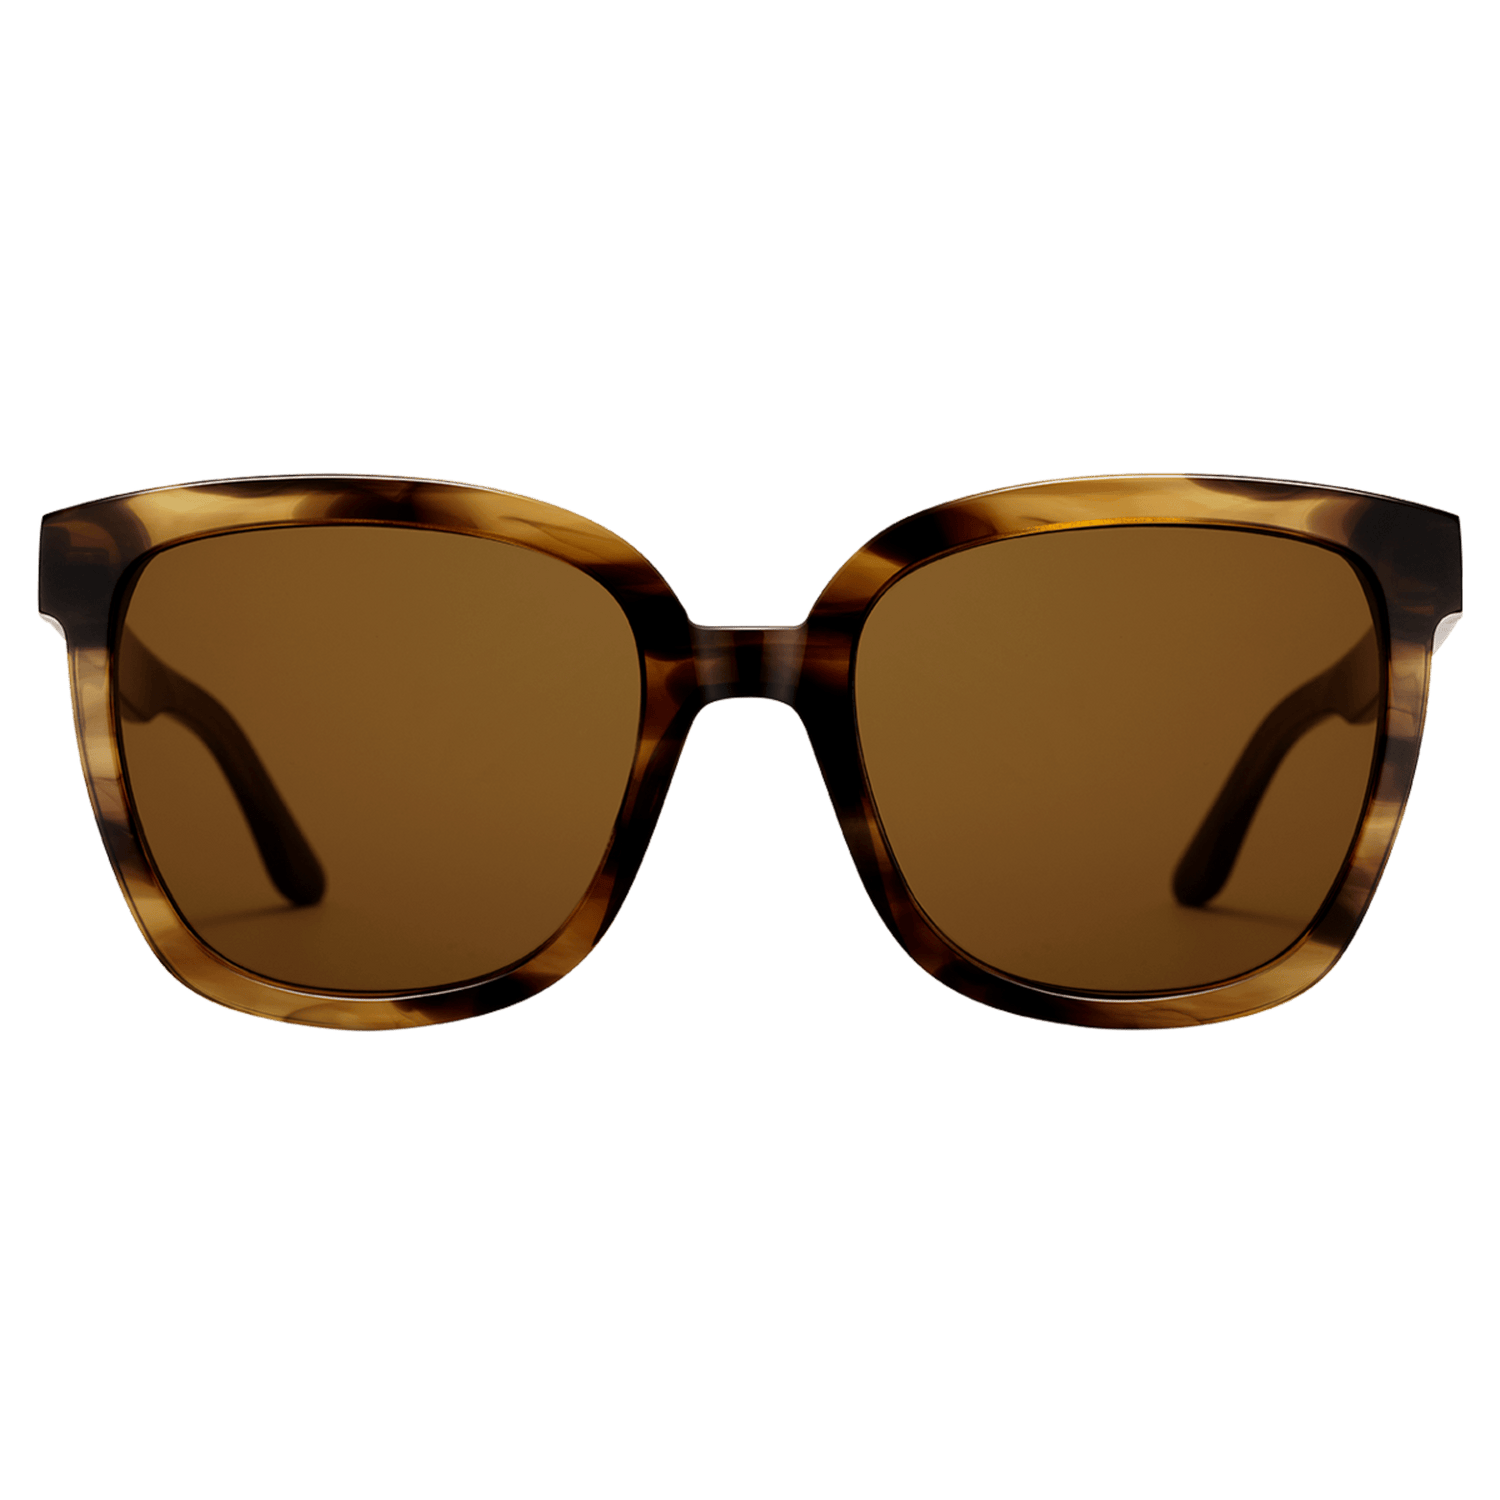 Lynx Acetate - Women's sunglasses - Brown | DW